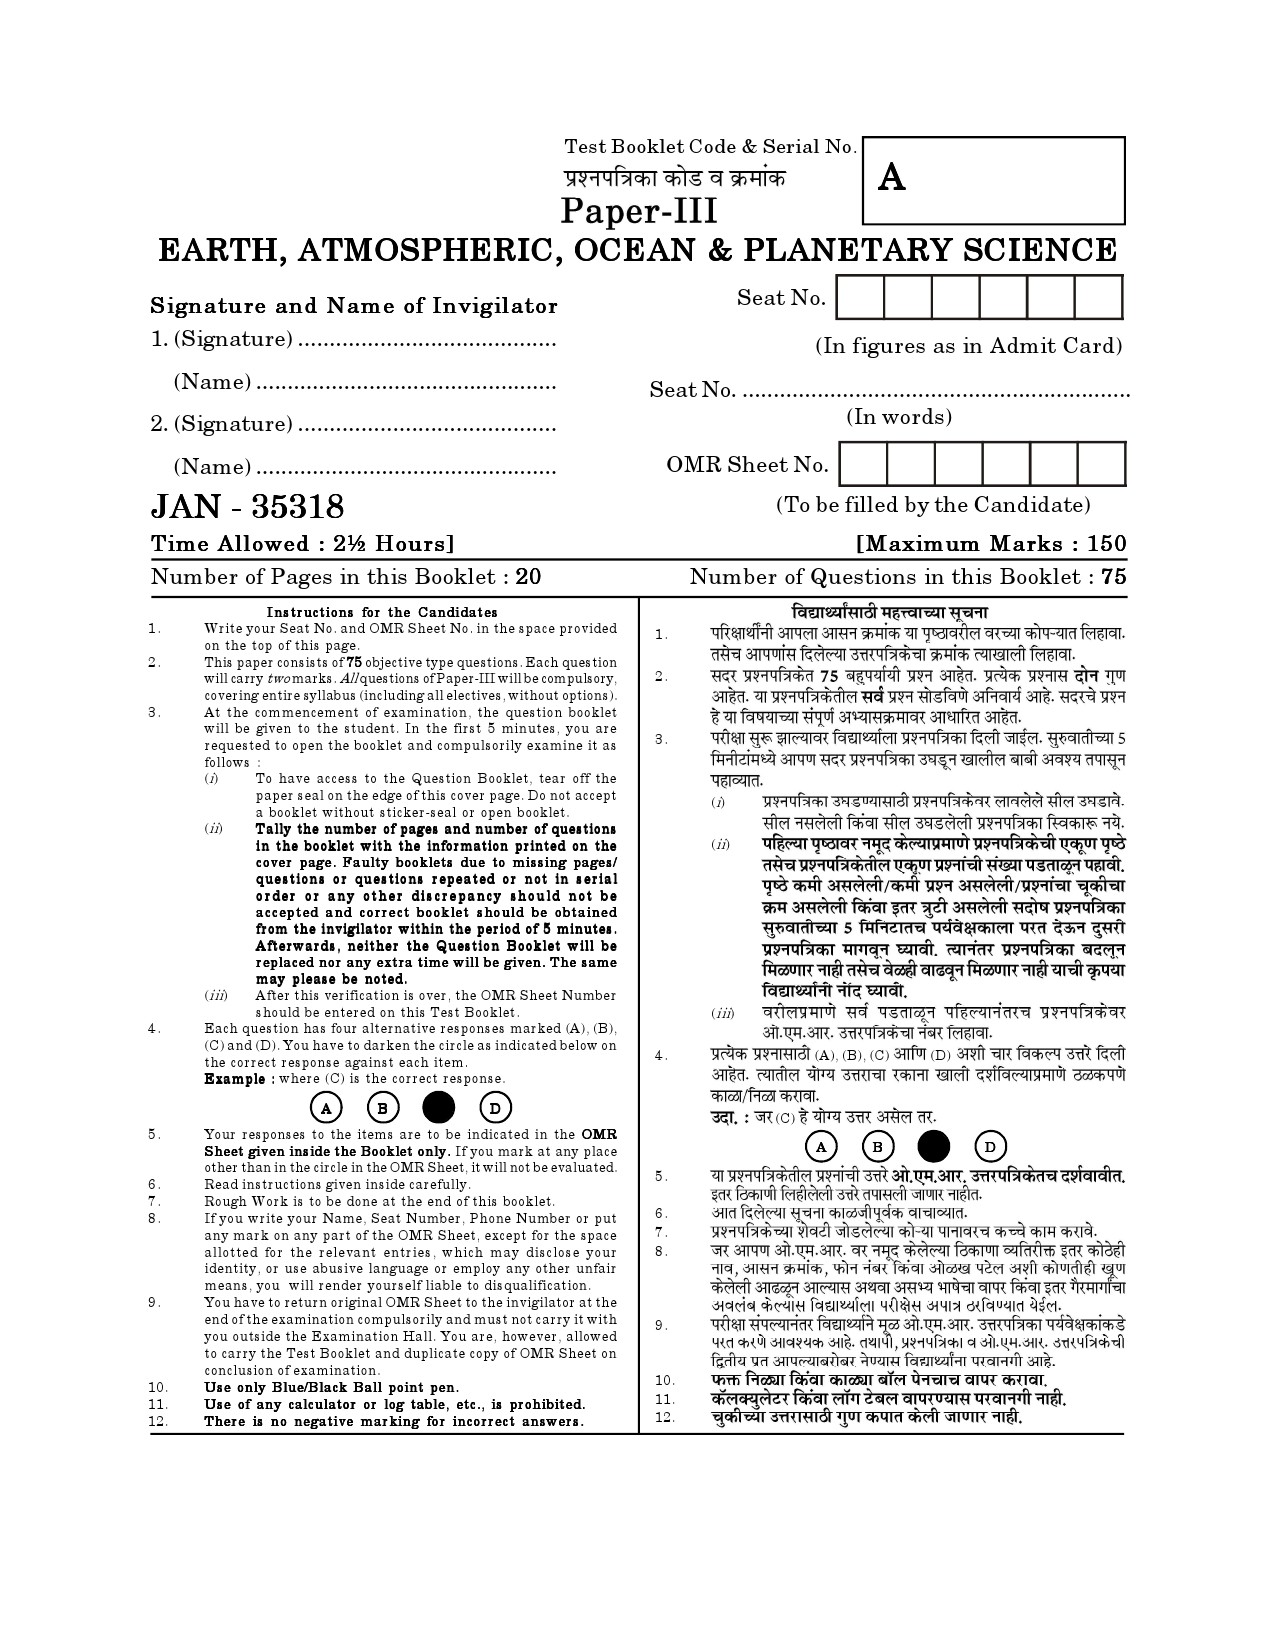 Maharashtra SET Earth Atmospheric Ocean Planetary Science Question Paper III January 2018 1